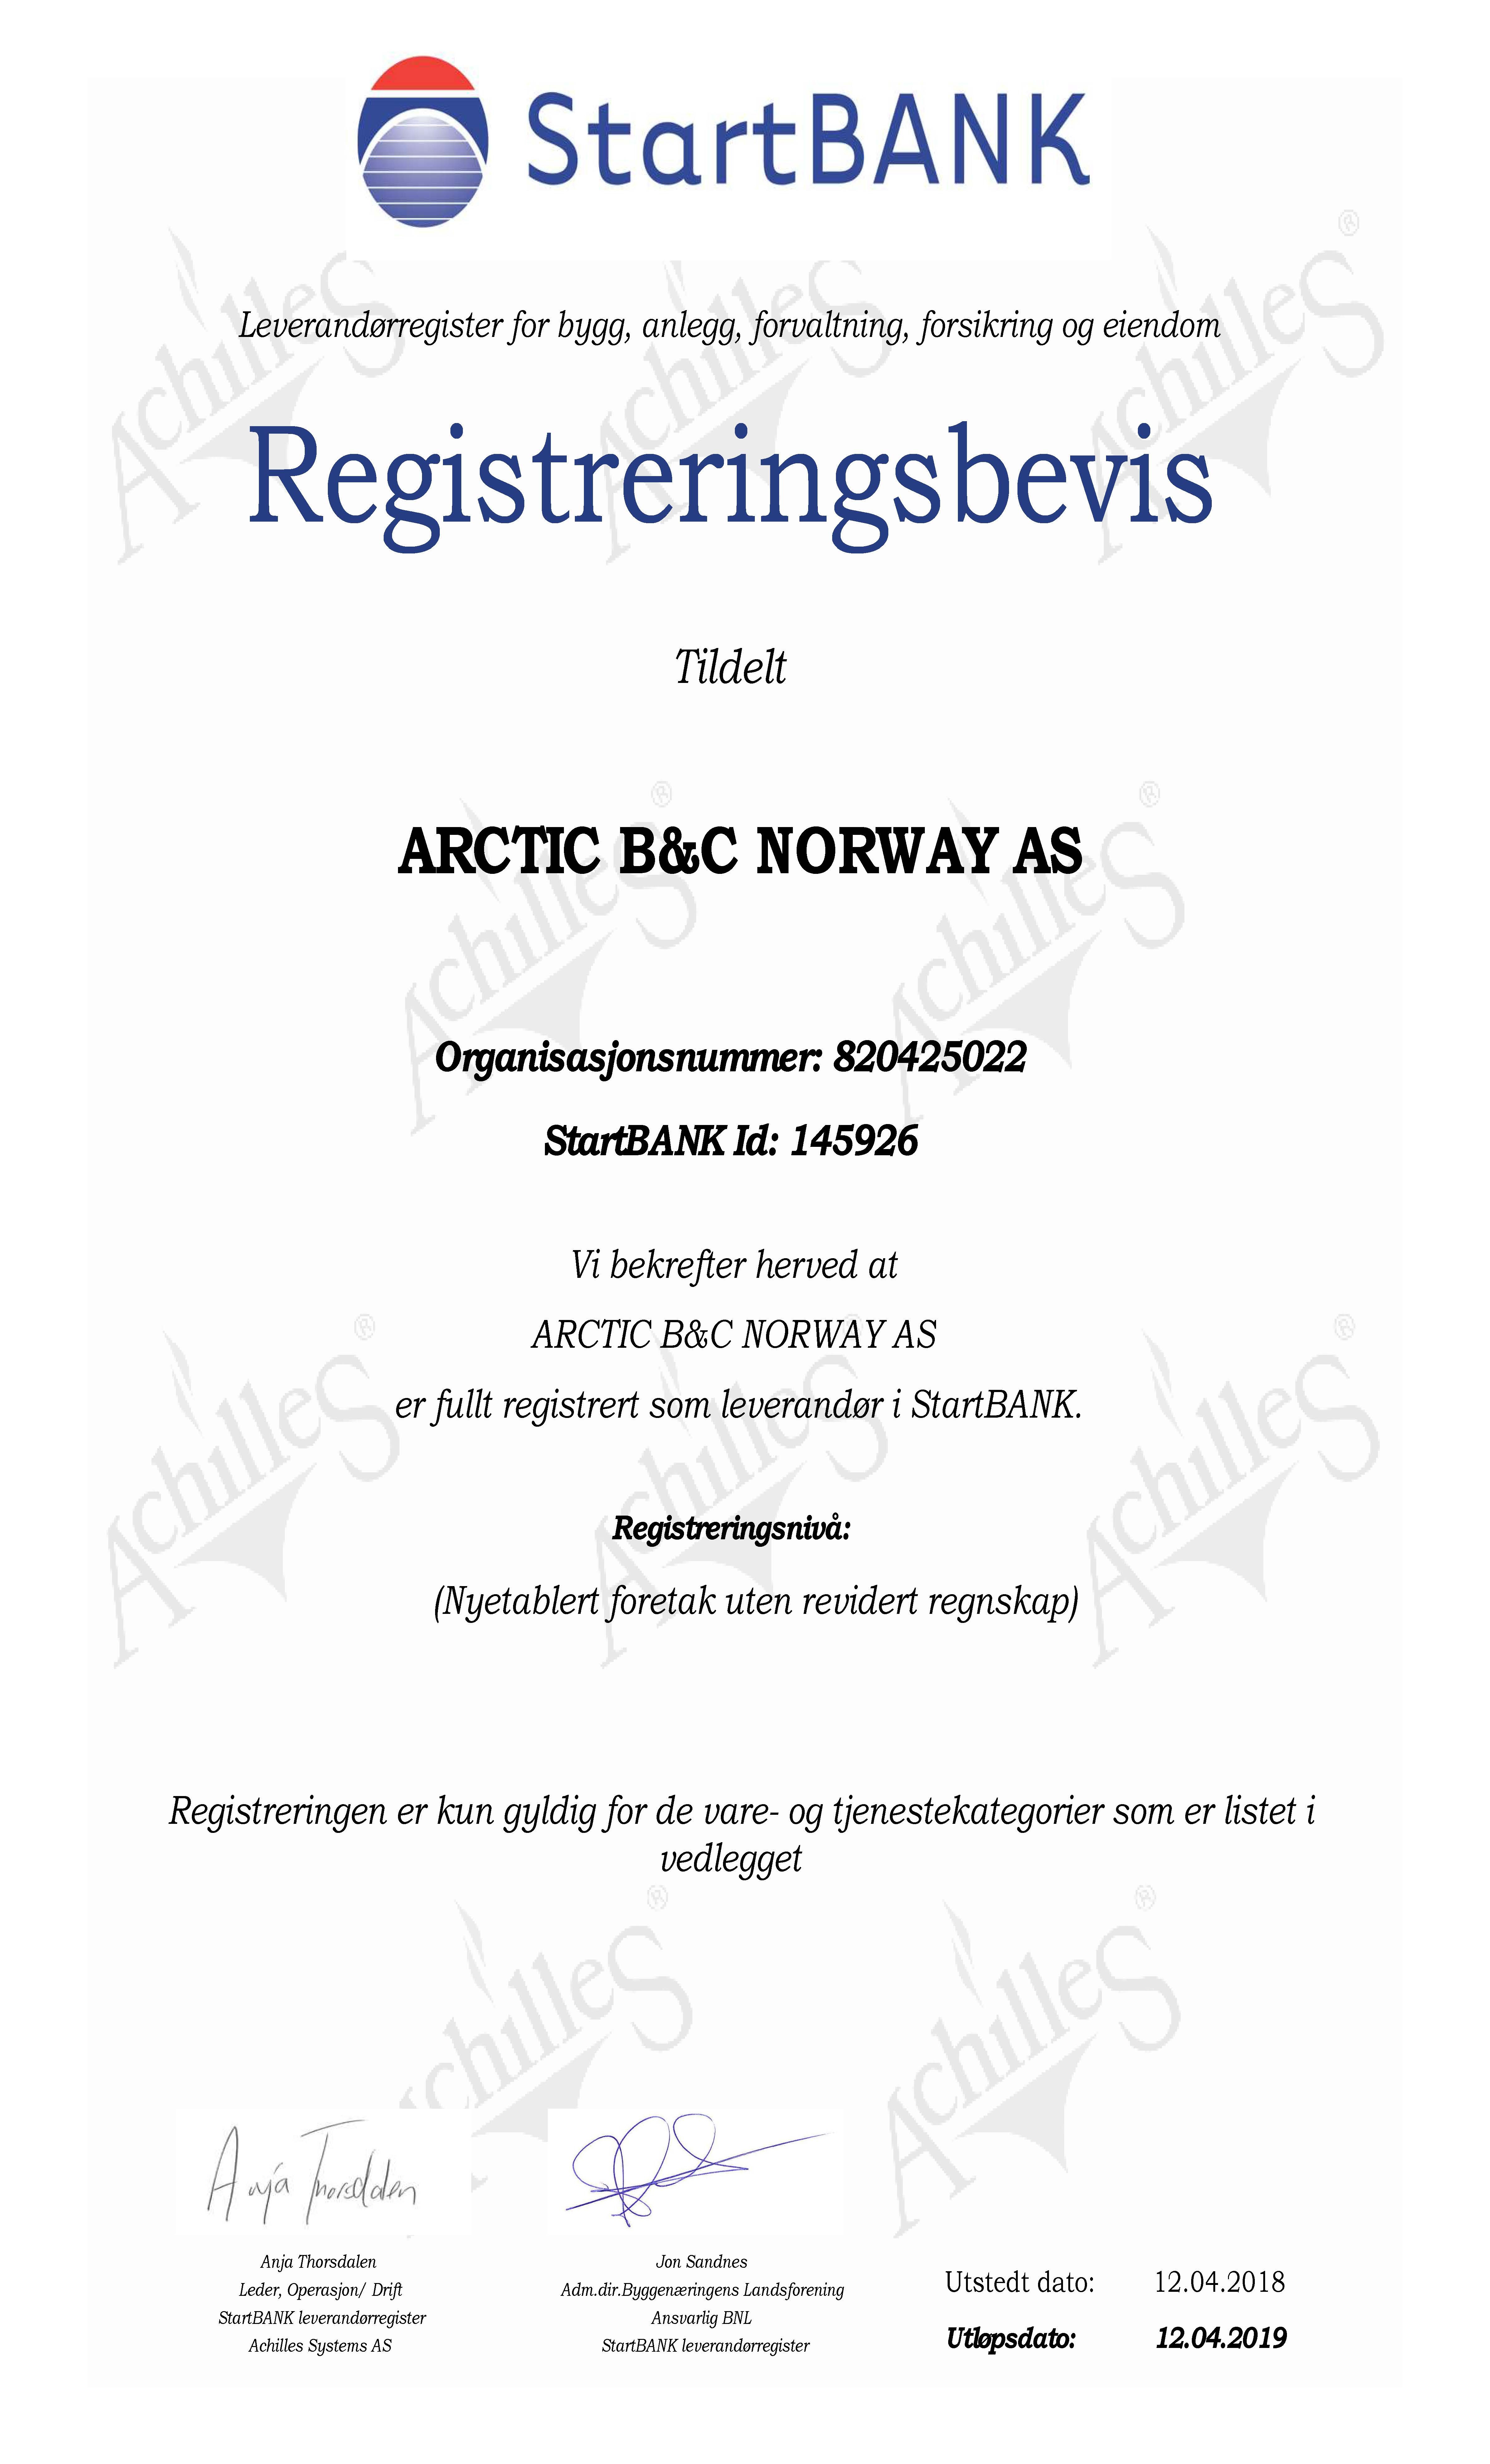 Certyfikat StartBANK dla Arctic B&C Norway AS